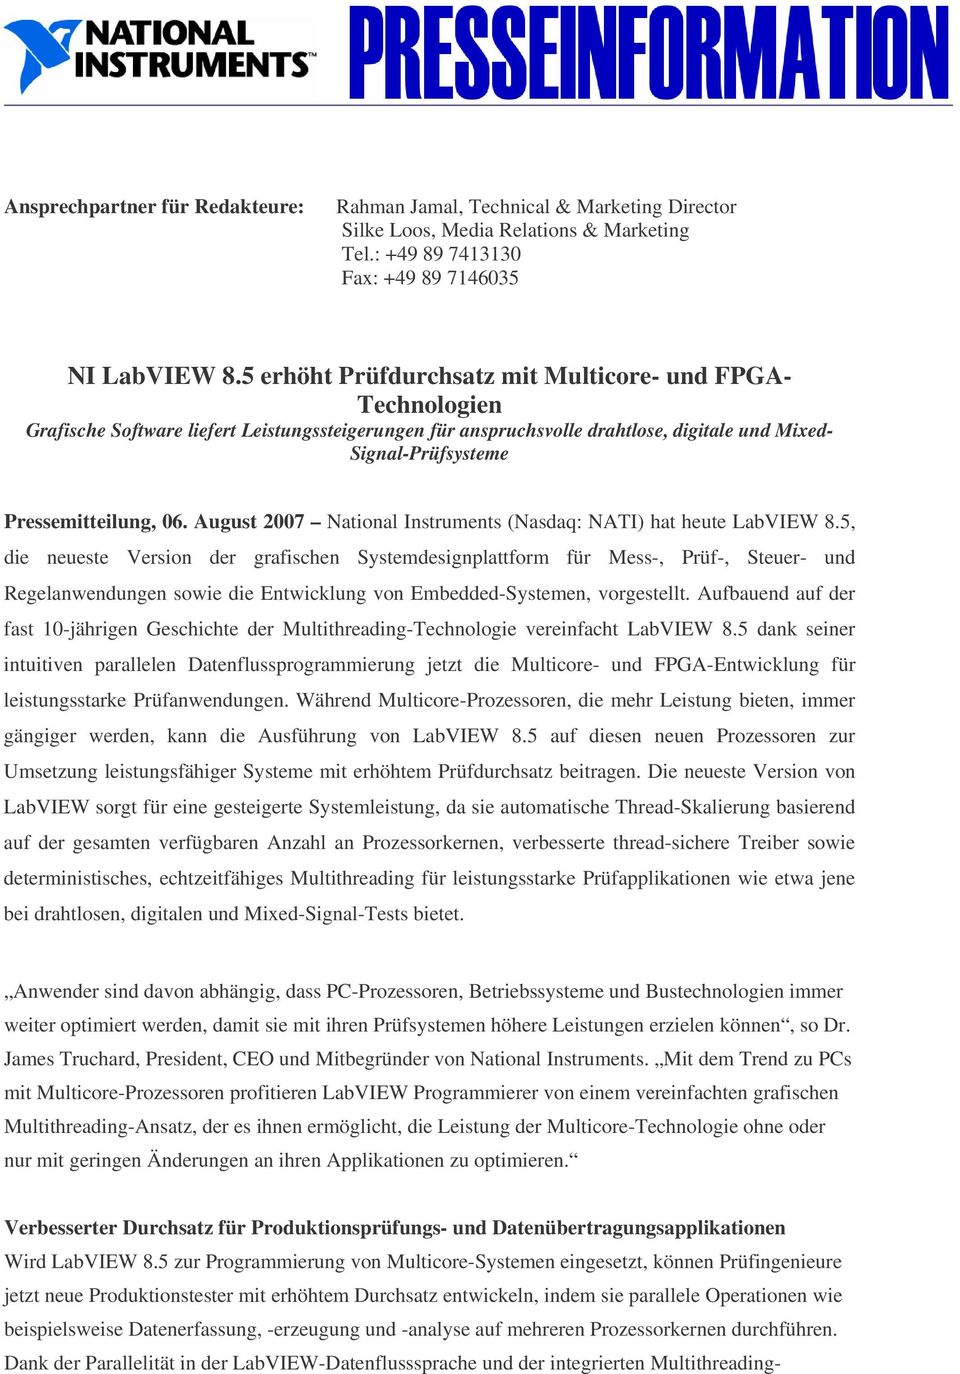 August 2007 National Instruments (Nasdaq: NATI) hat heute LabVIEW 8.